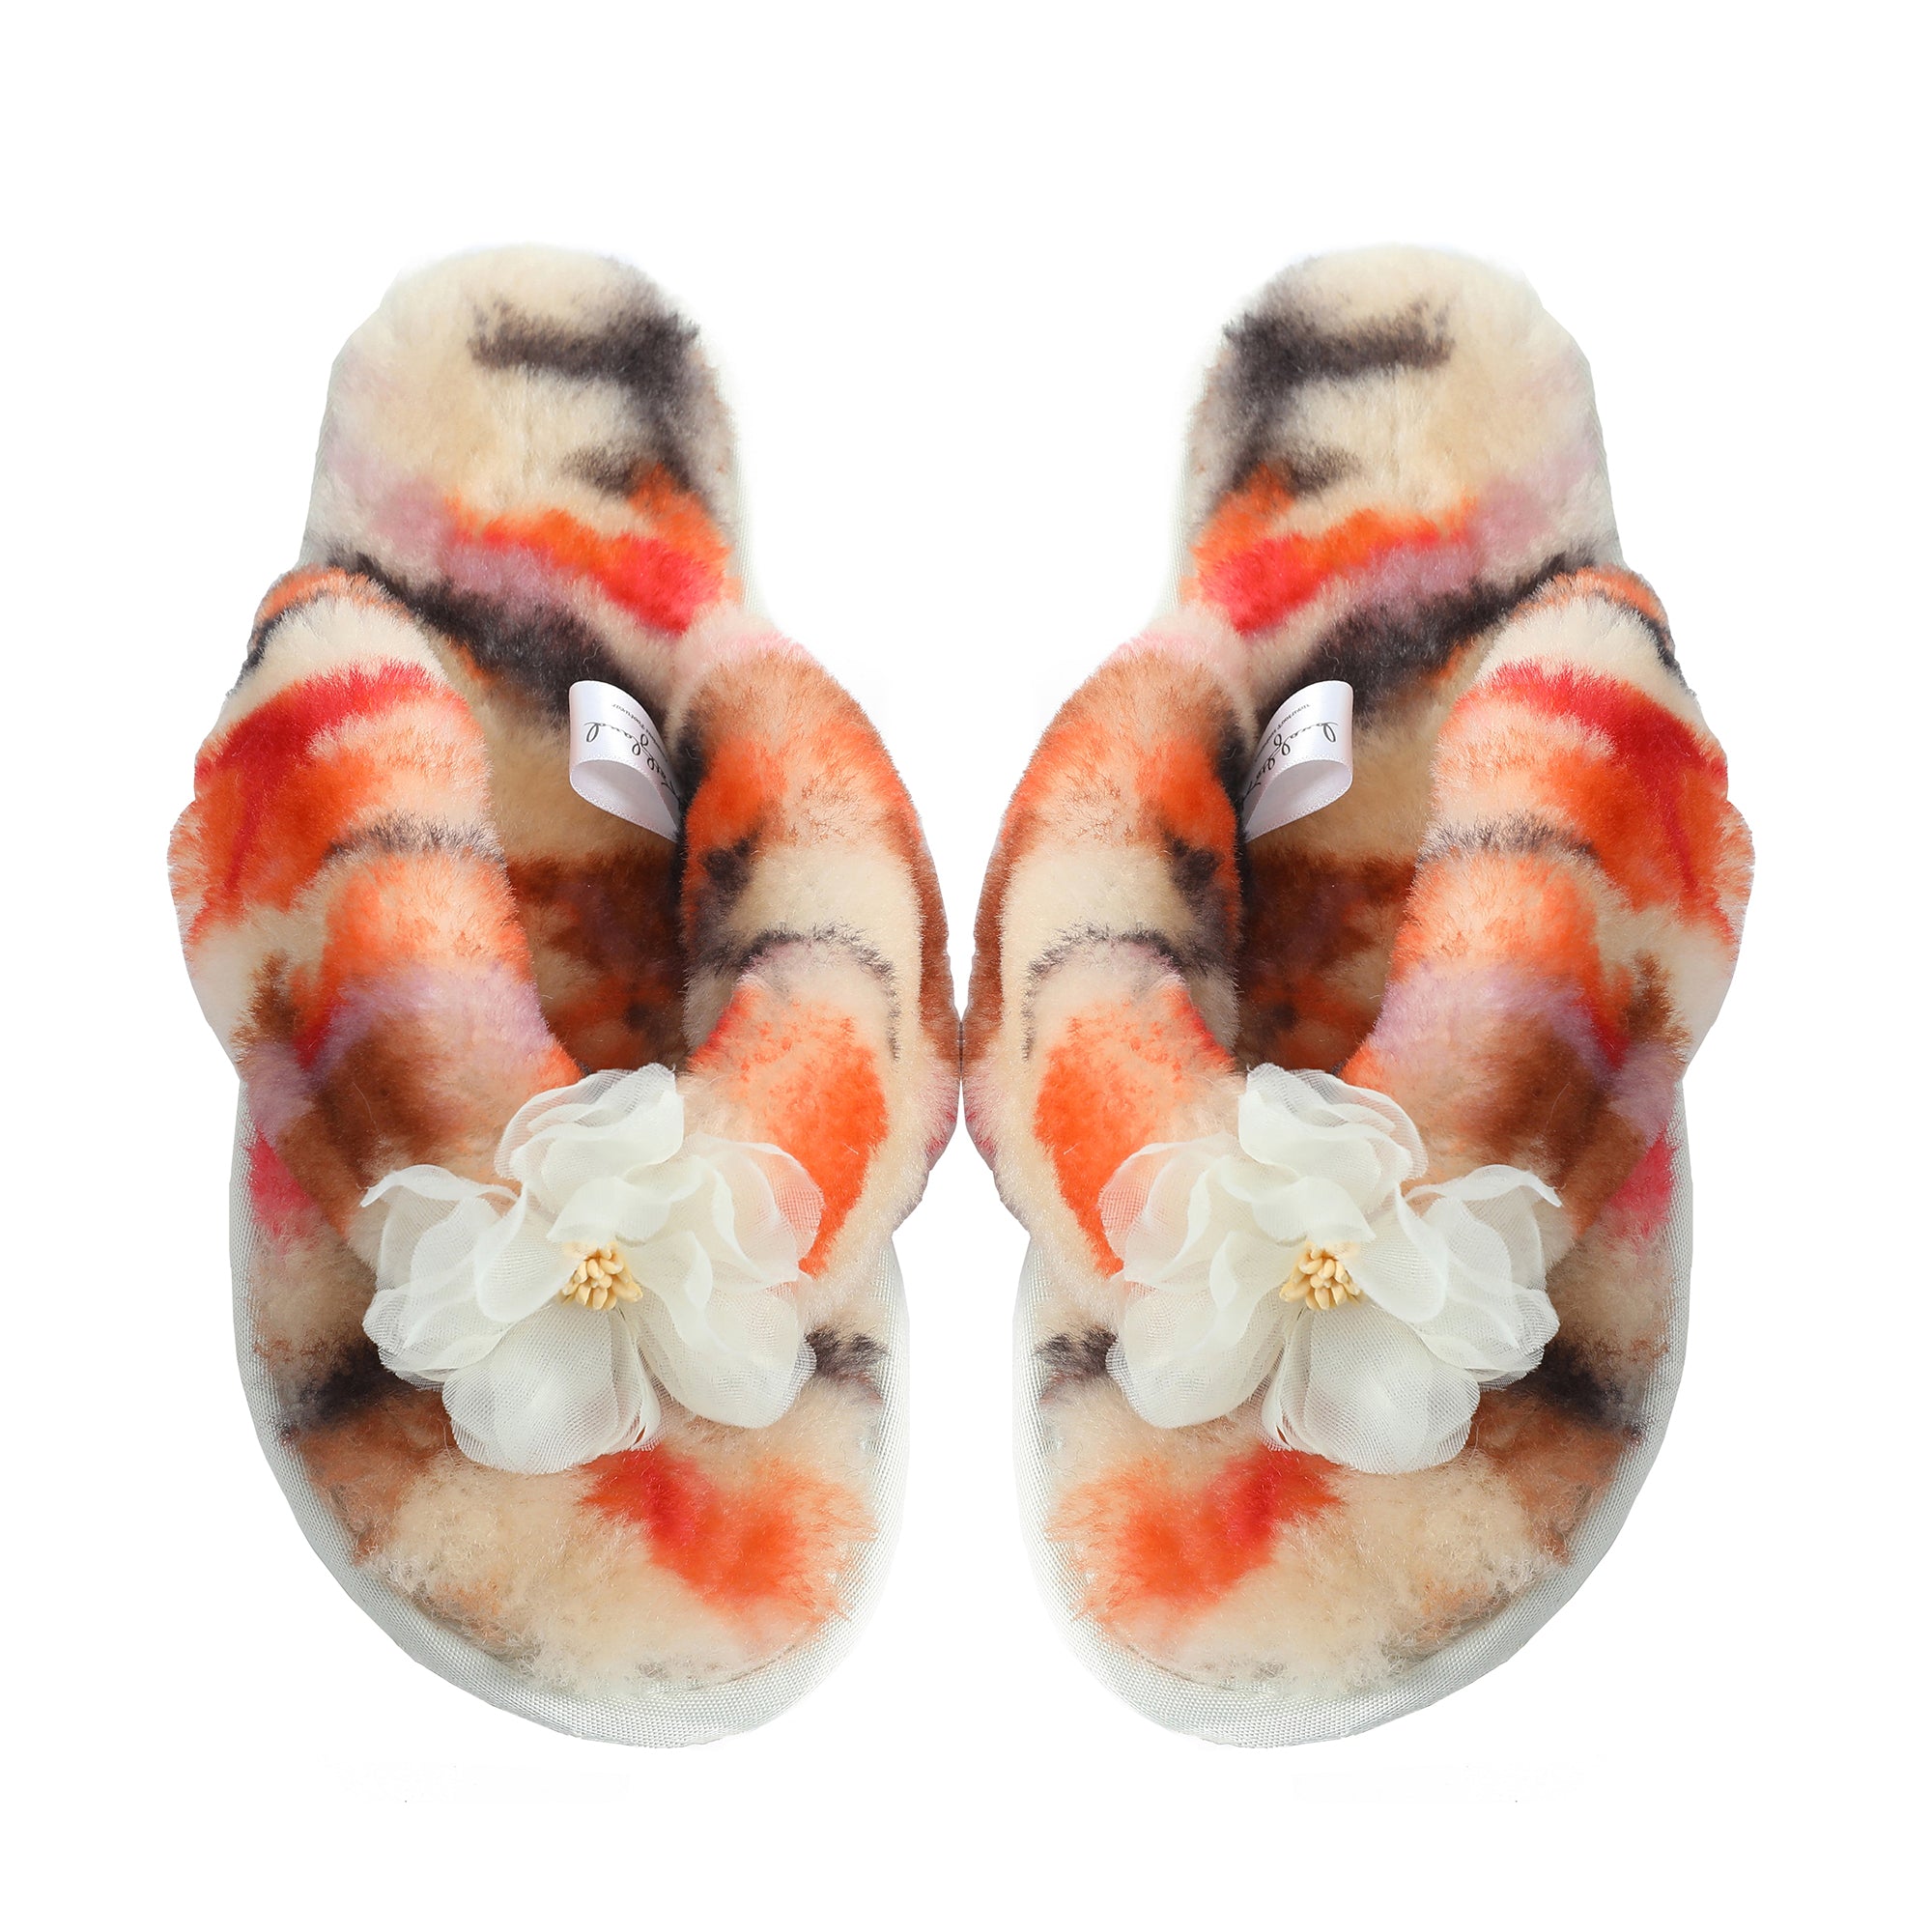 Millffy Fashion Sheepskin Women's Slippers Fluffy Leopard Thong Slippers Home Slippers Bedroom Shoes Slides